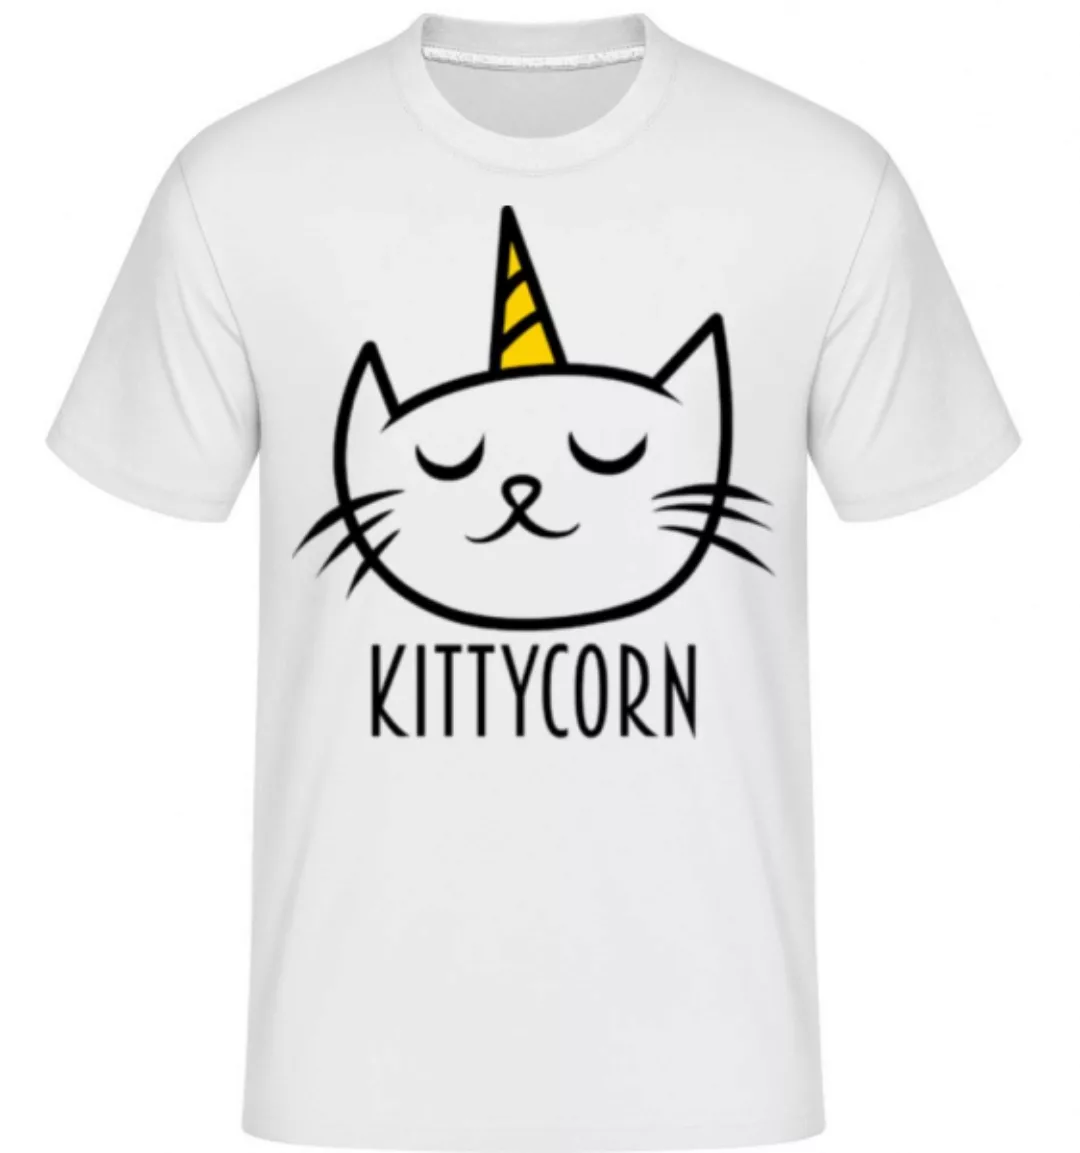 Kittycorn · Shirtinator Männer T-Shirt günstig online kaufen